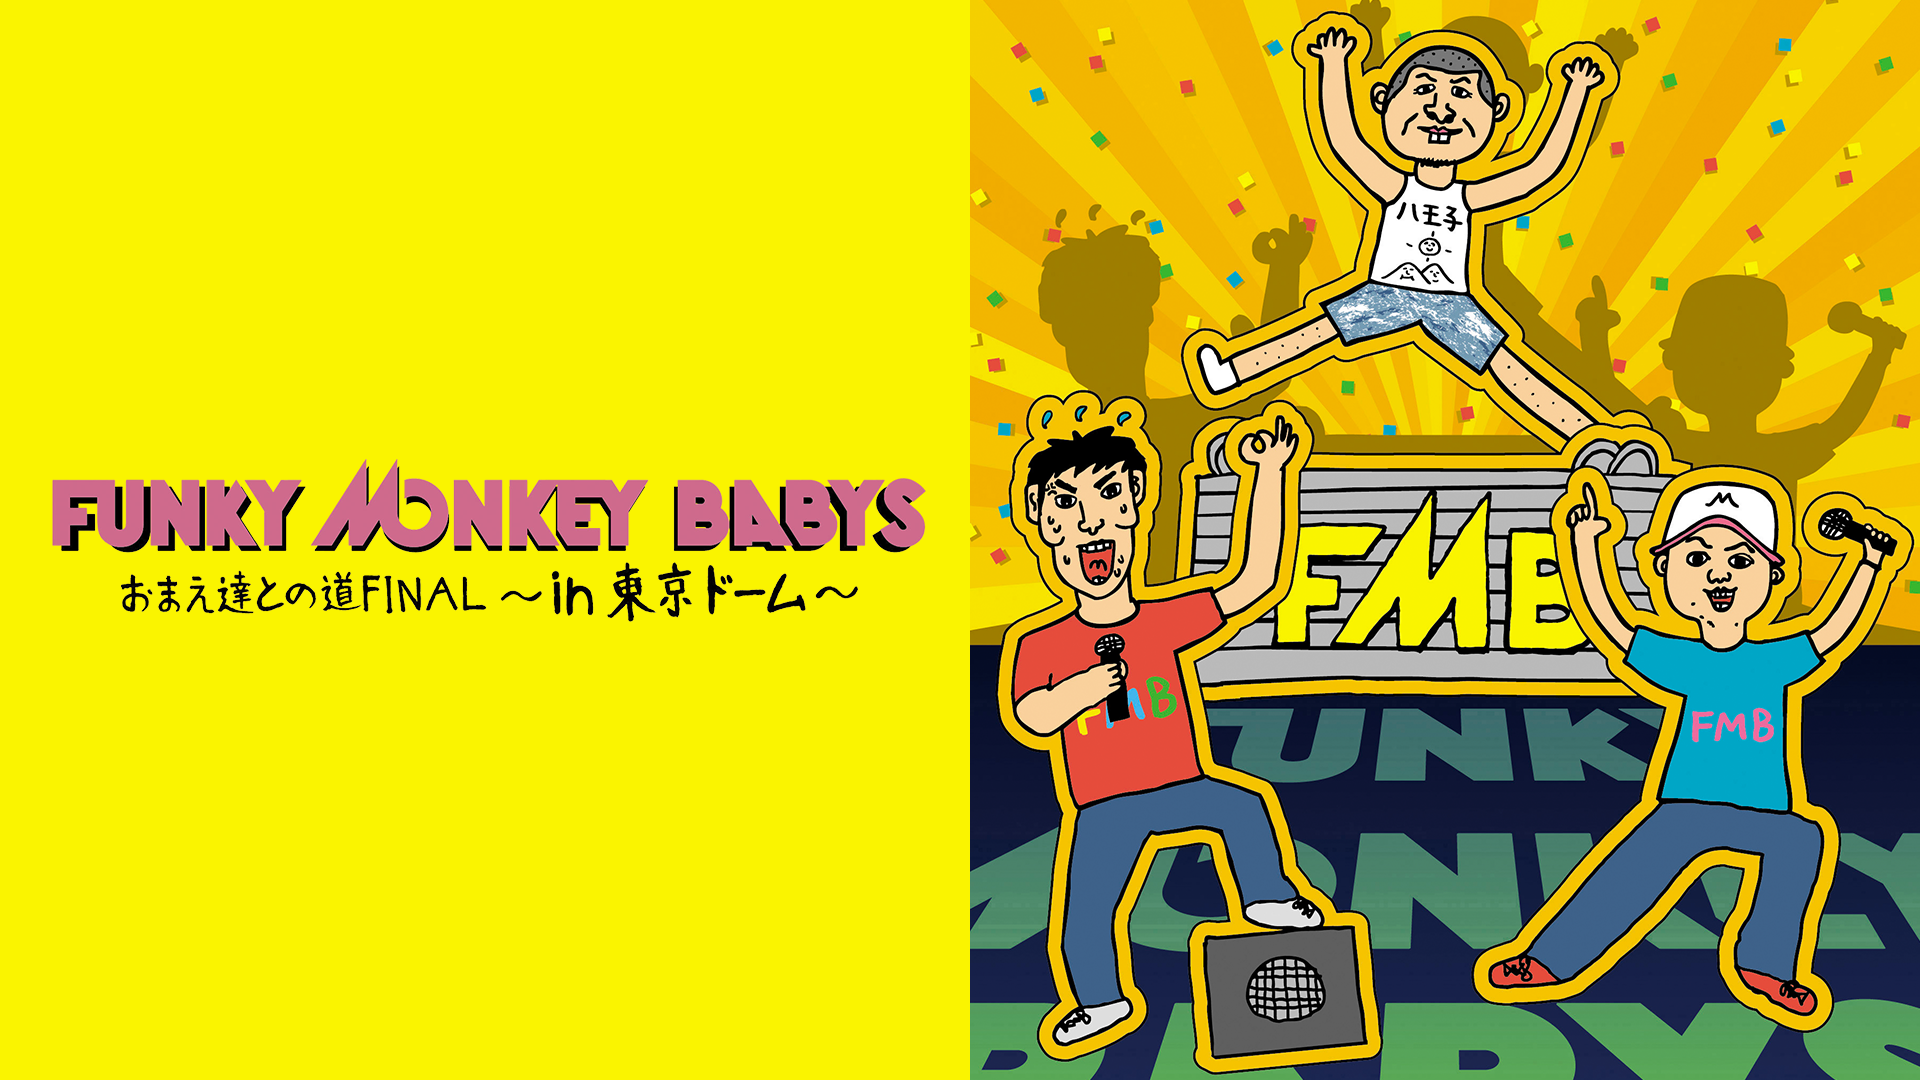 FUNKY MONKEY BABYS「おまえ達との道 FINAL~in 東京ドーム~」(音楽・ライブ / 2013) - 動画配信 | U-NEXT  31日間無料トライアル